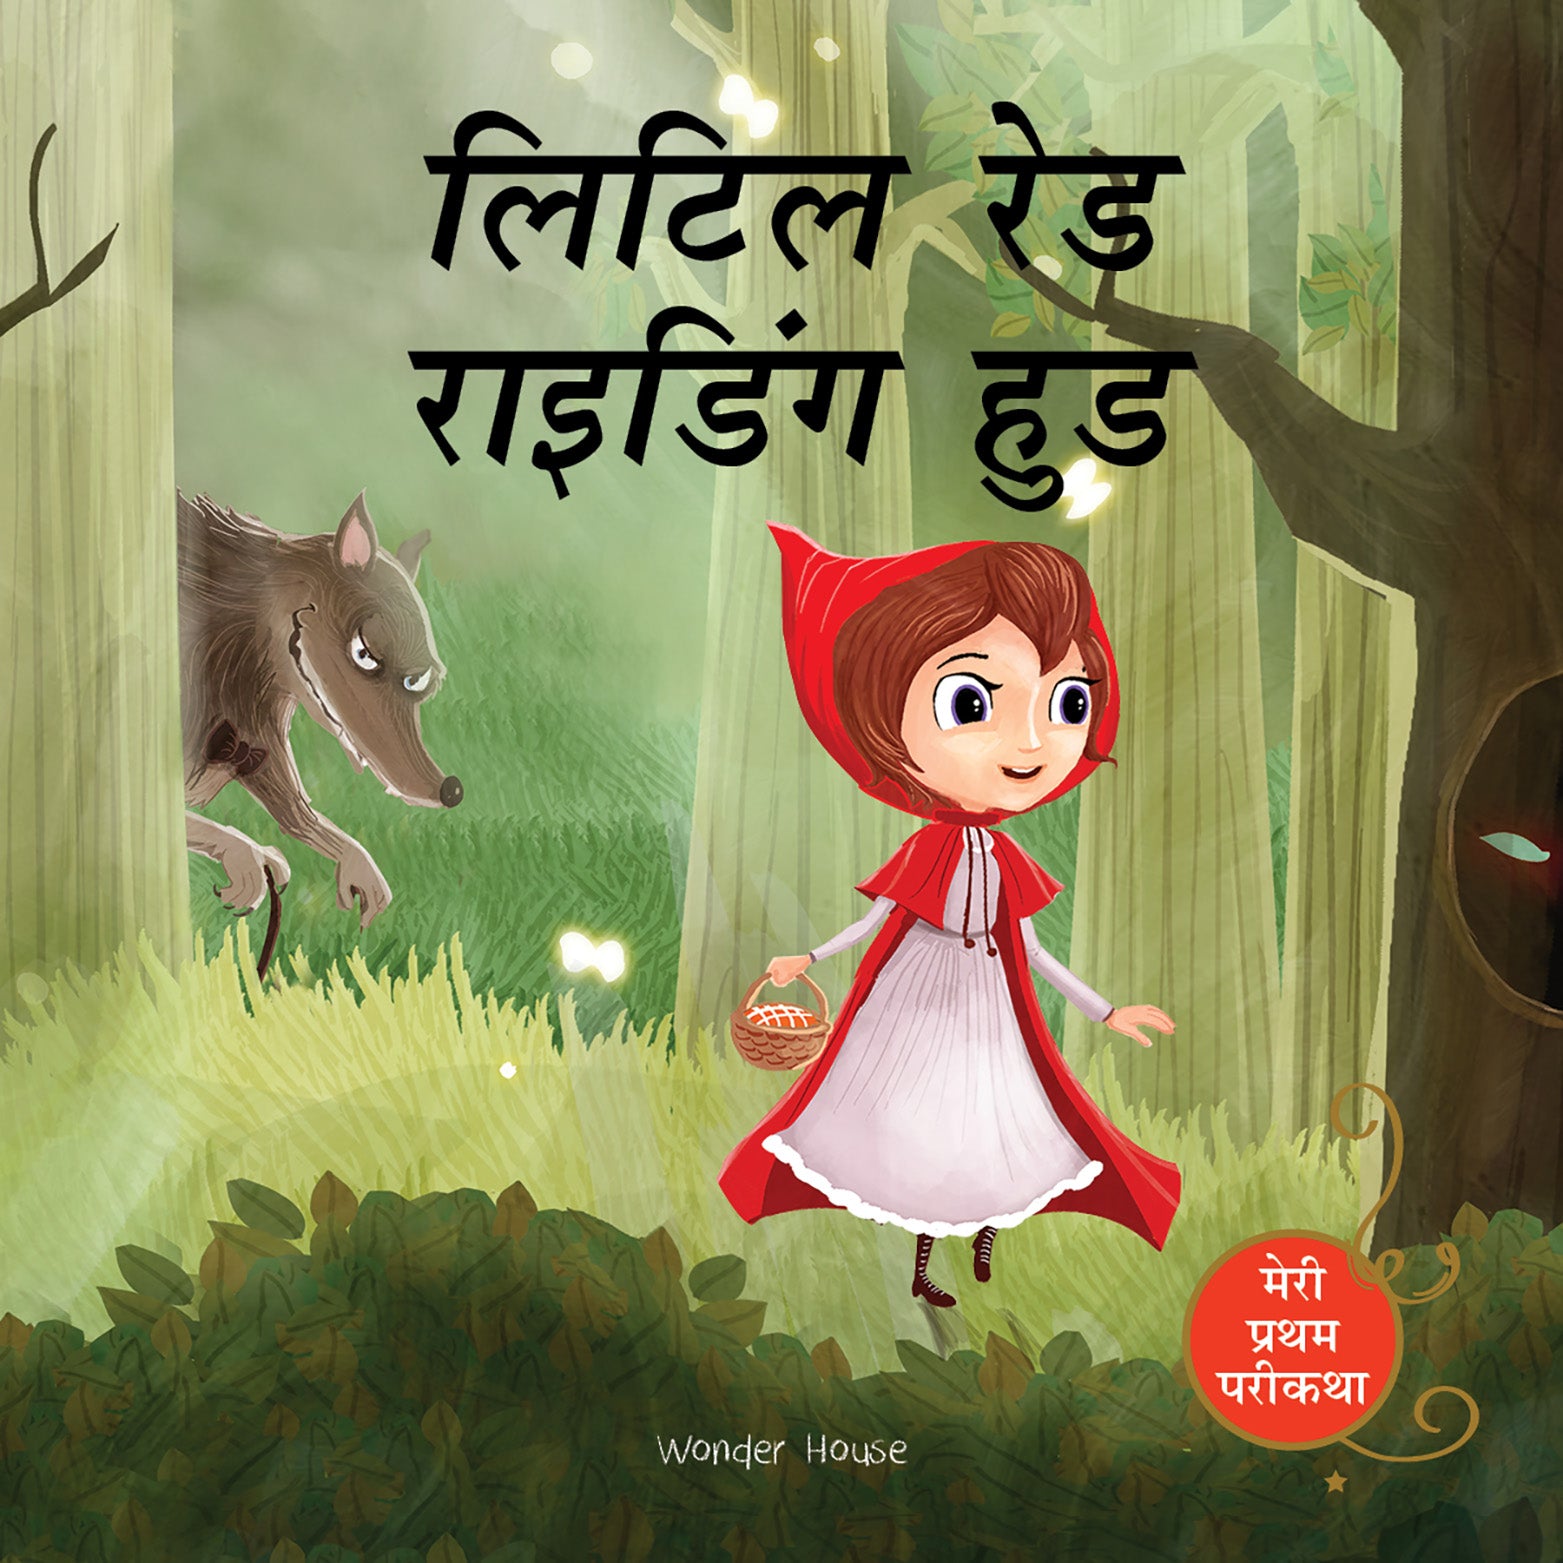 Little Red Riding Hood Fairy Tale (Meri Pratham Parikatha - Little Red Riding Hood): Abridged Illustrated Fairy Tale In Hindi